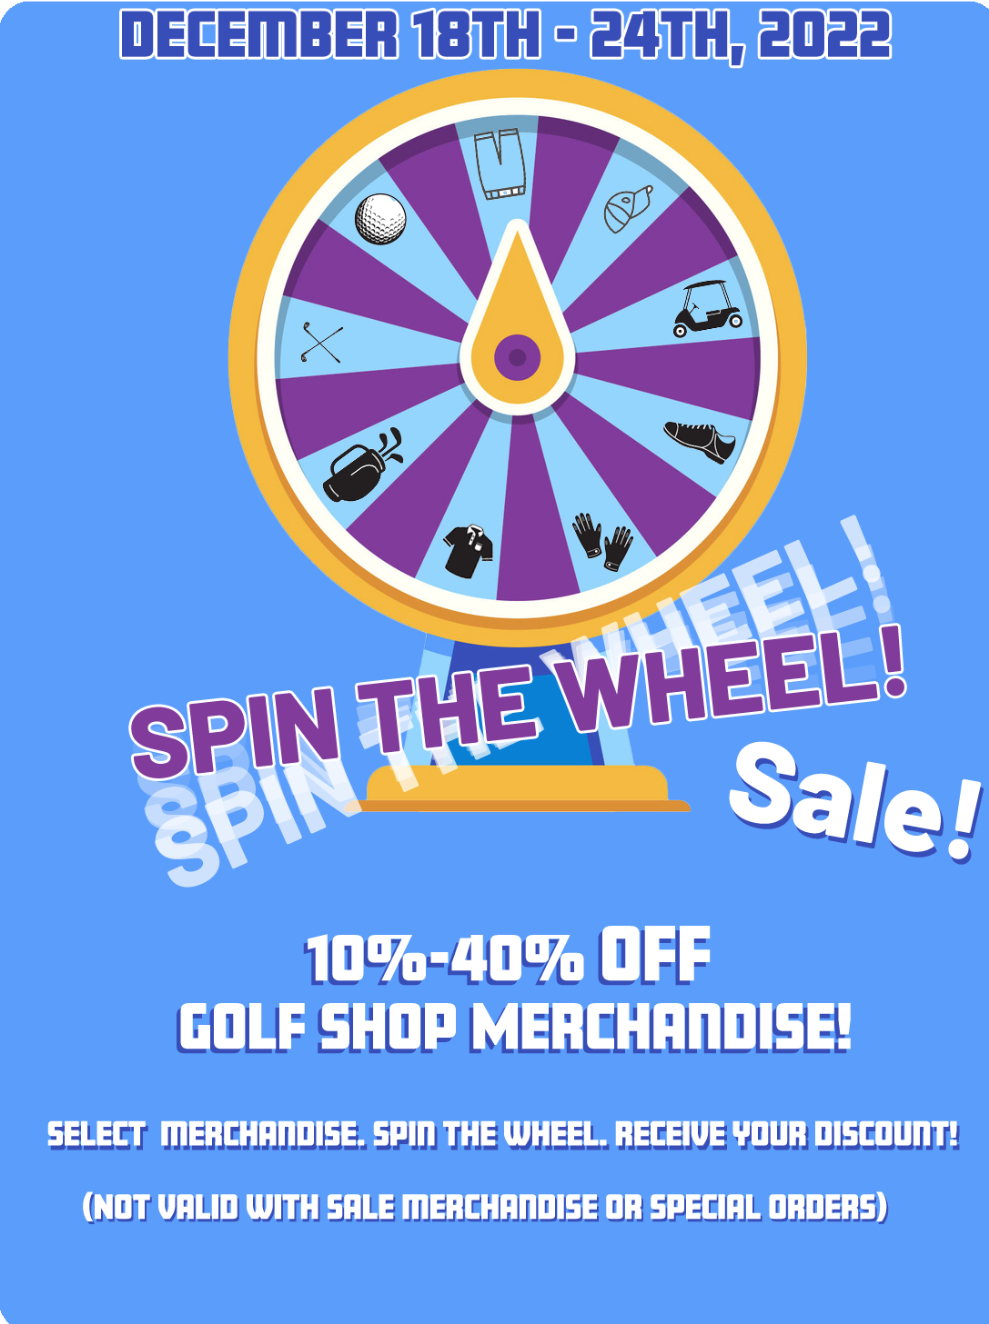 Spin The WheelSale! 10-40% off Golf Shop Merchandise